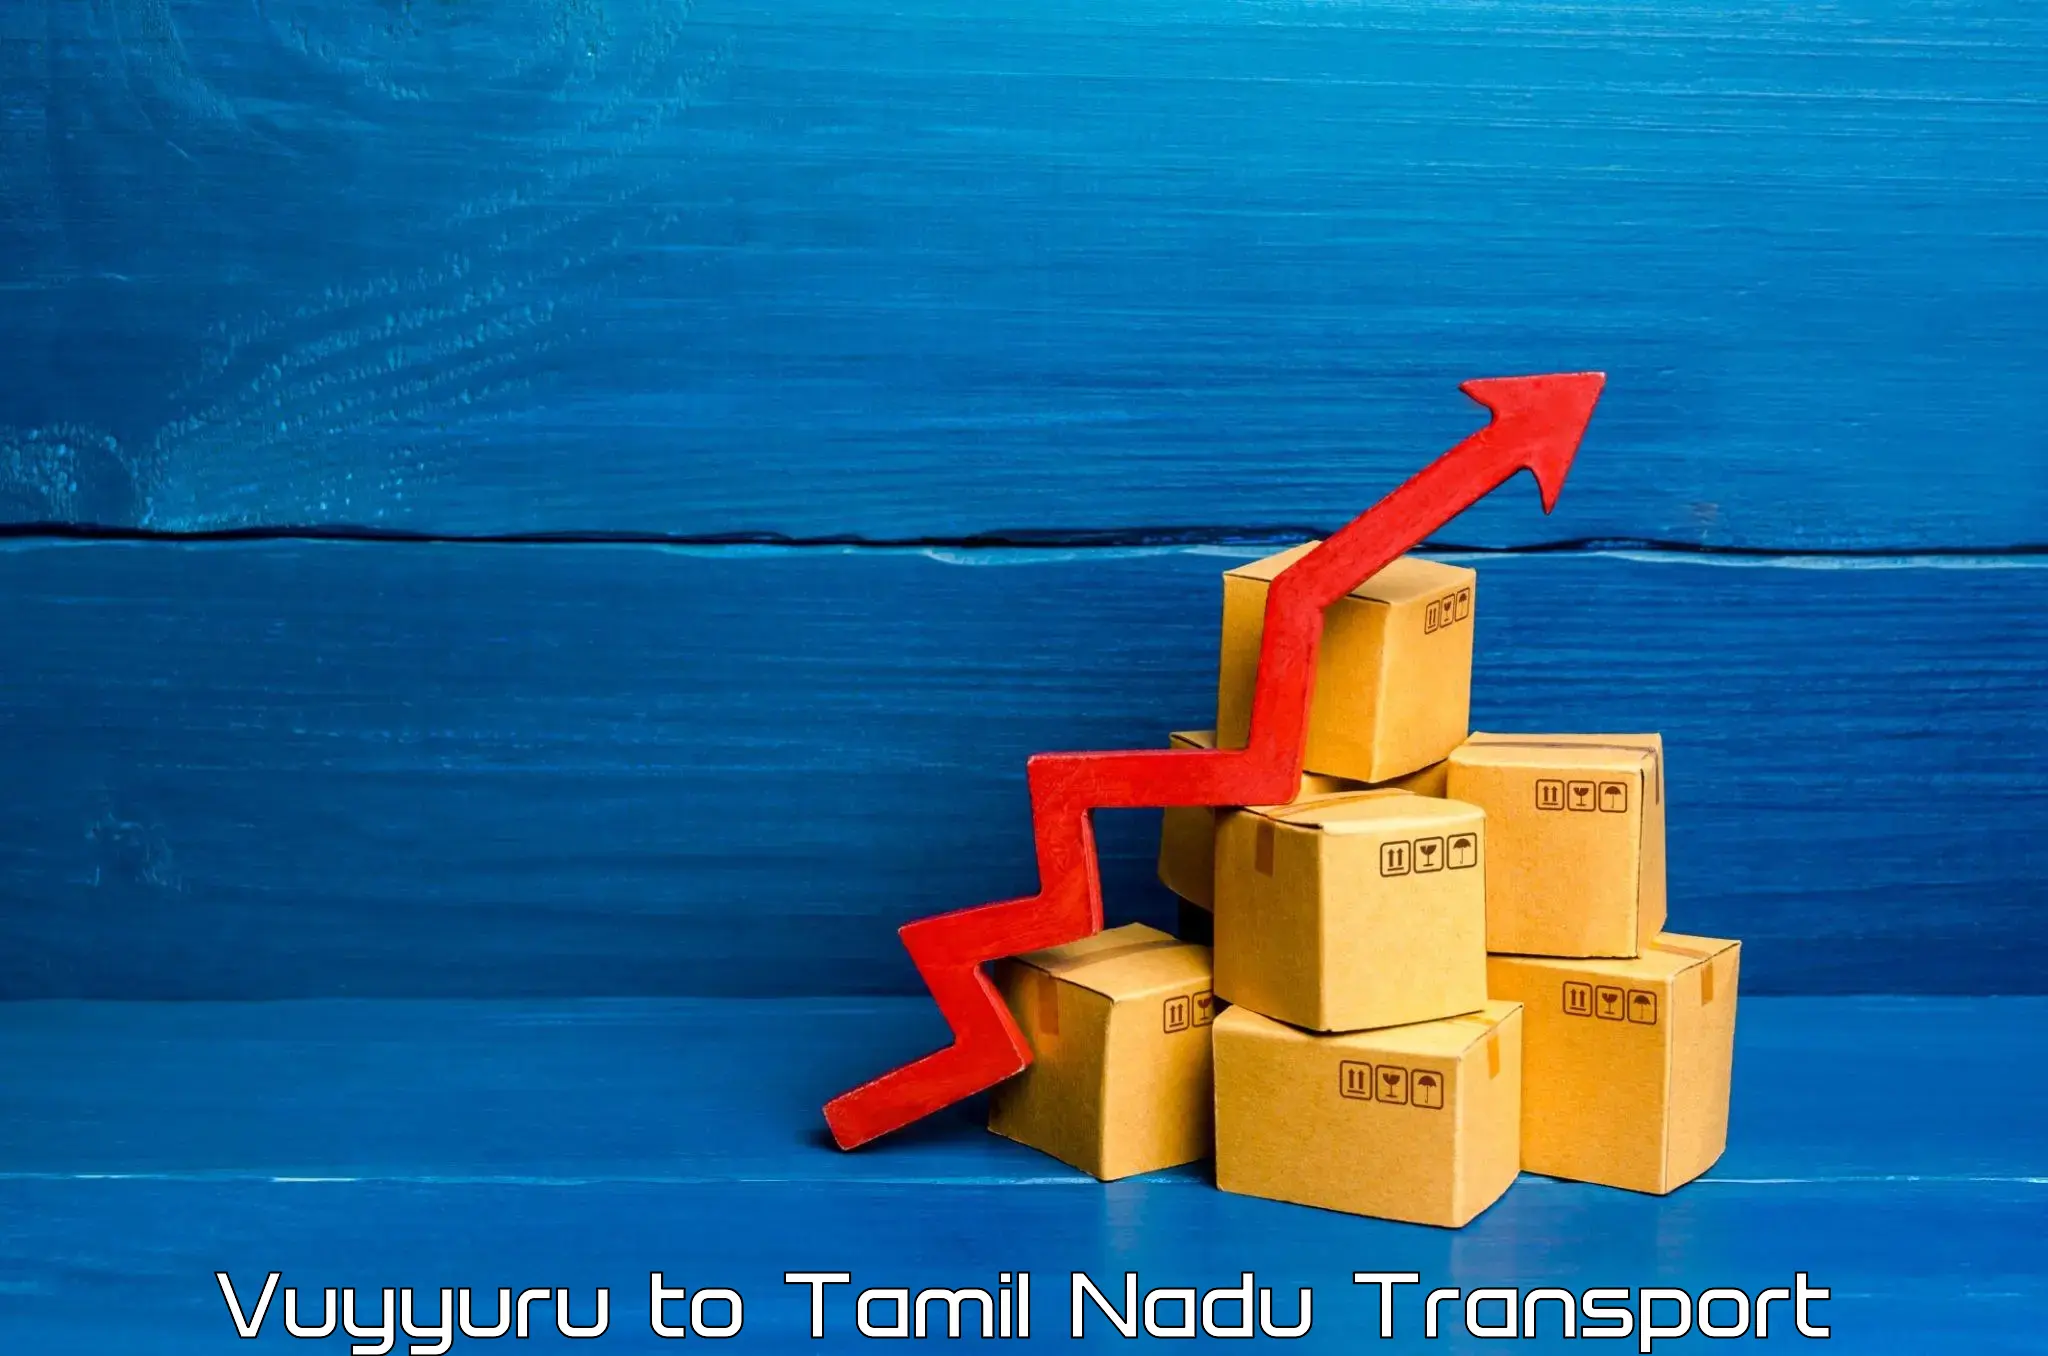 Nearby transport service Vuyyuru to Tamil Nadu